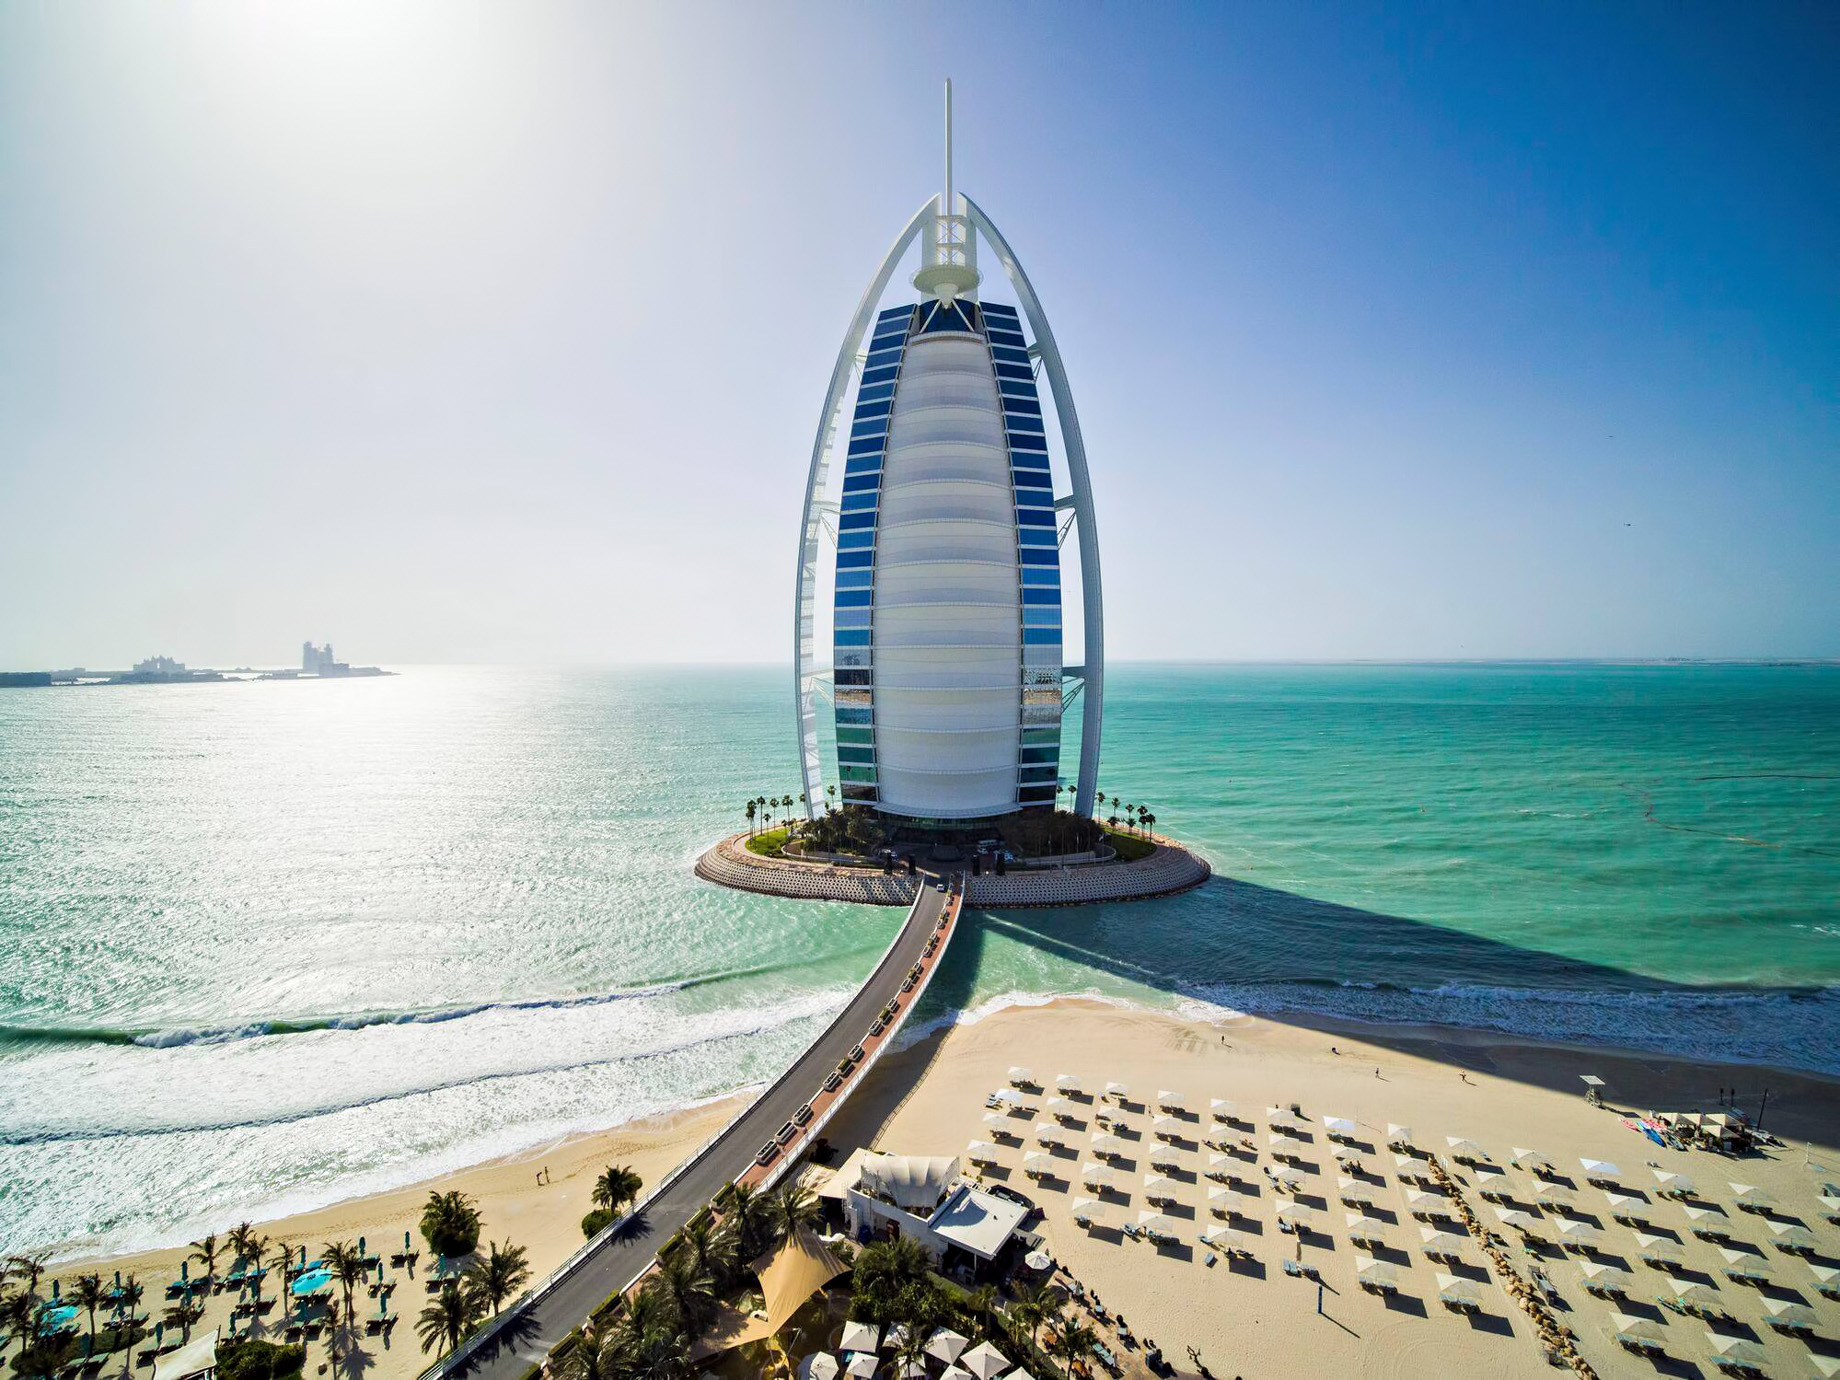 Burj Al Arab Jumeirah Hotel – Dubai, UAE – Ocean View Aerial